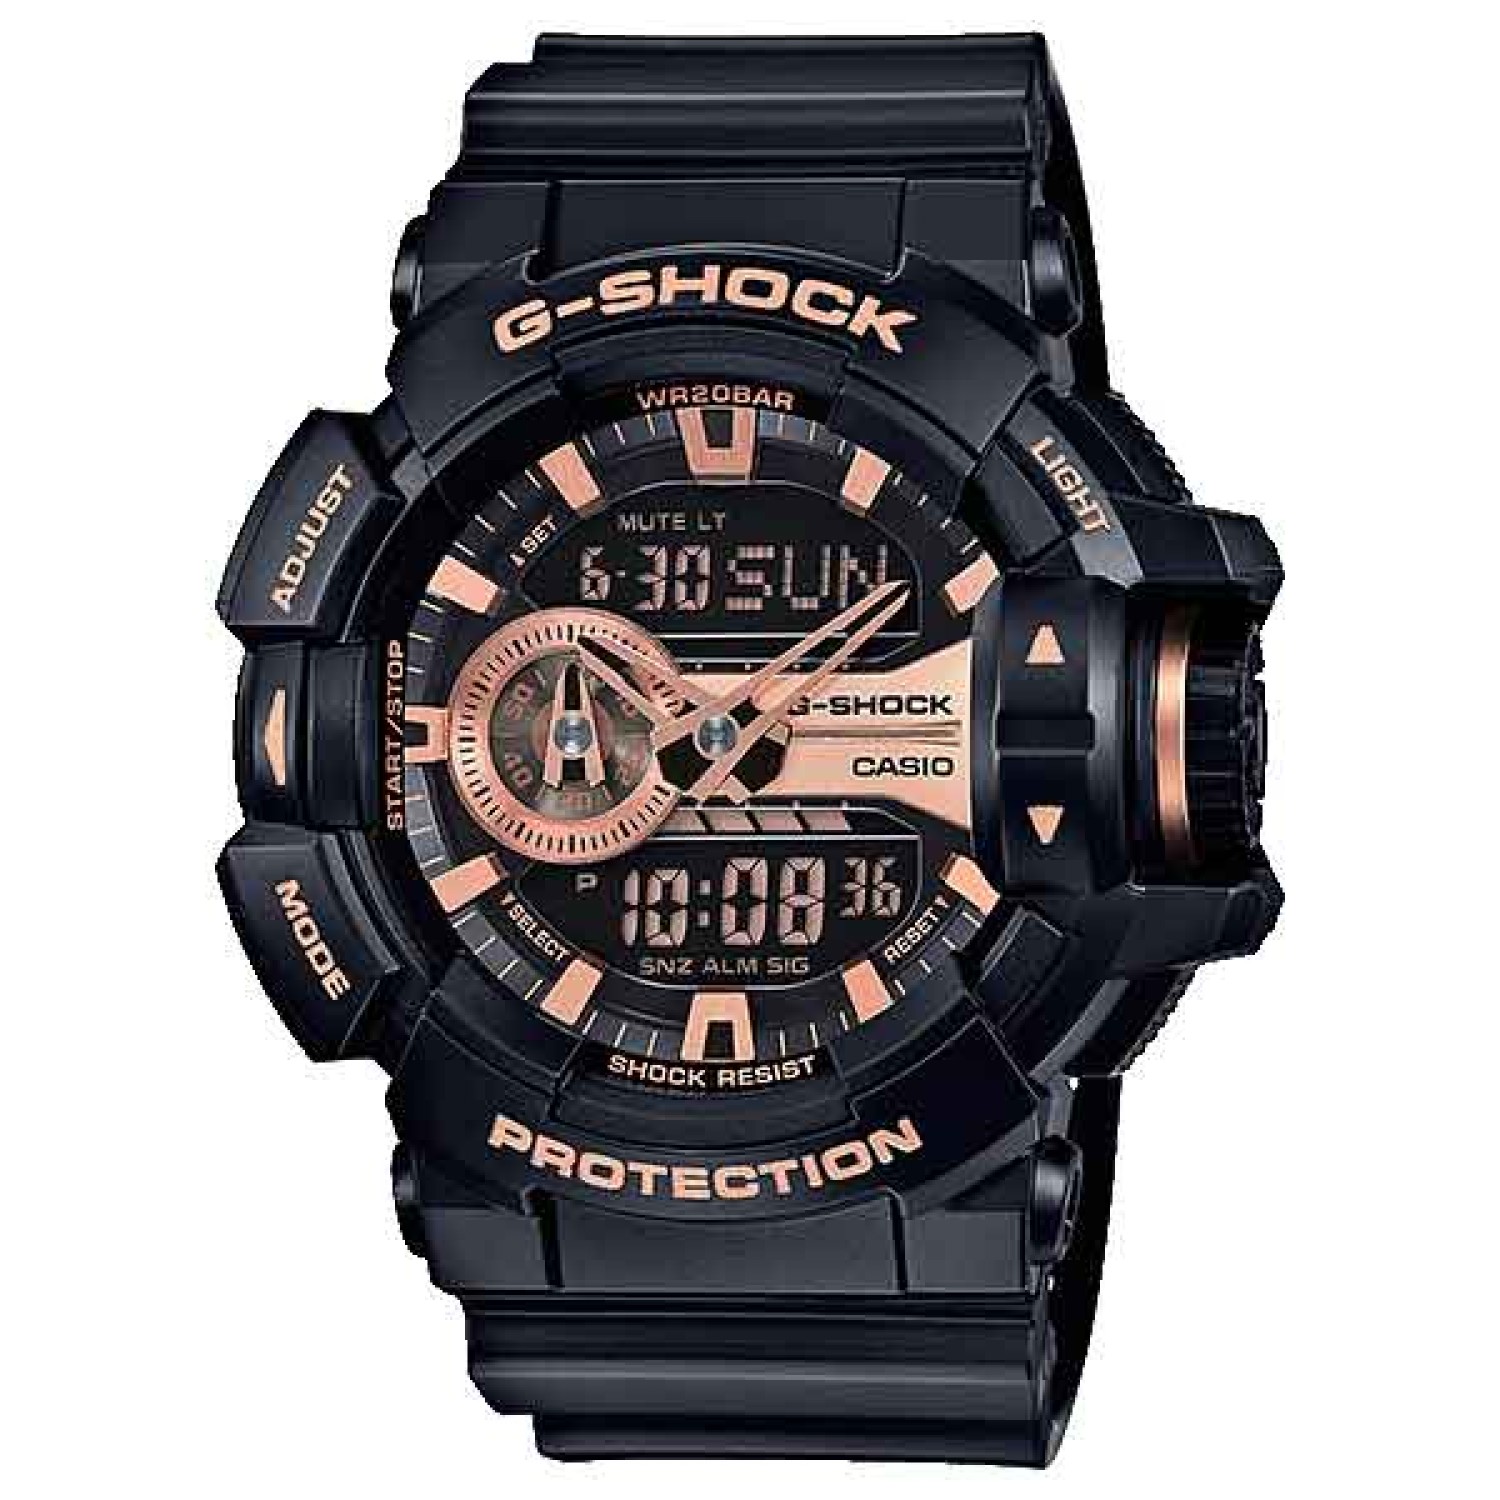 GA400GB-1A4 G-SHOCK Black and Rose.casio watches nz sale $319.00